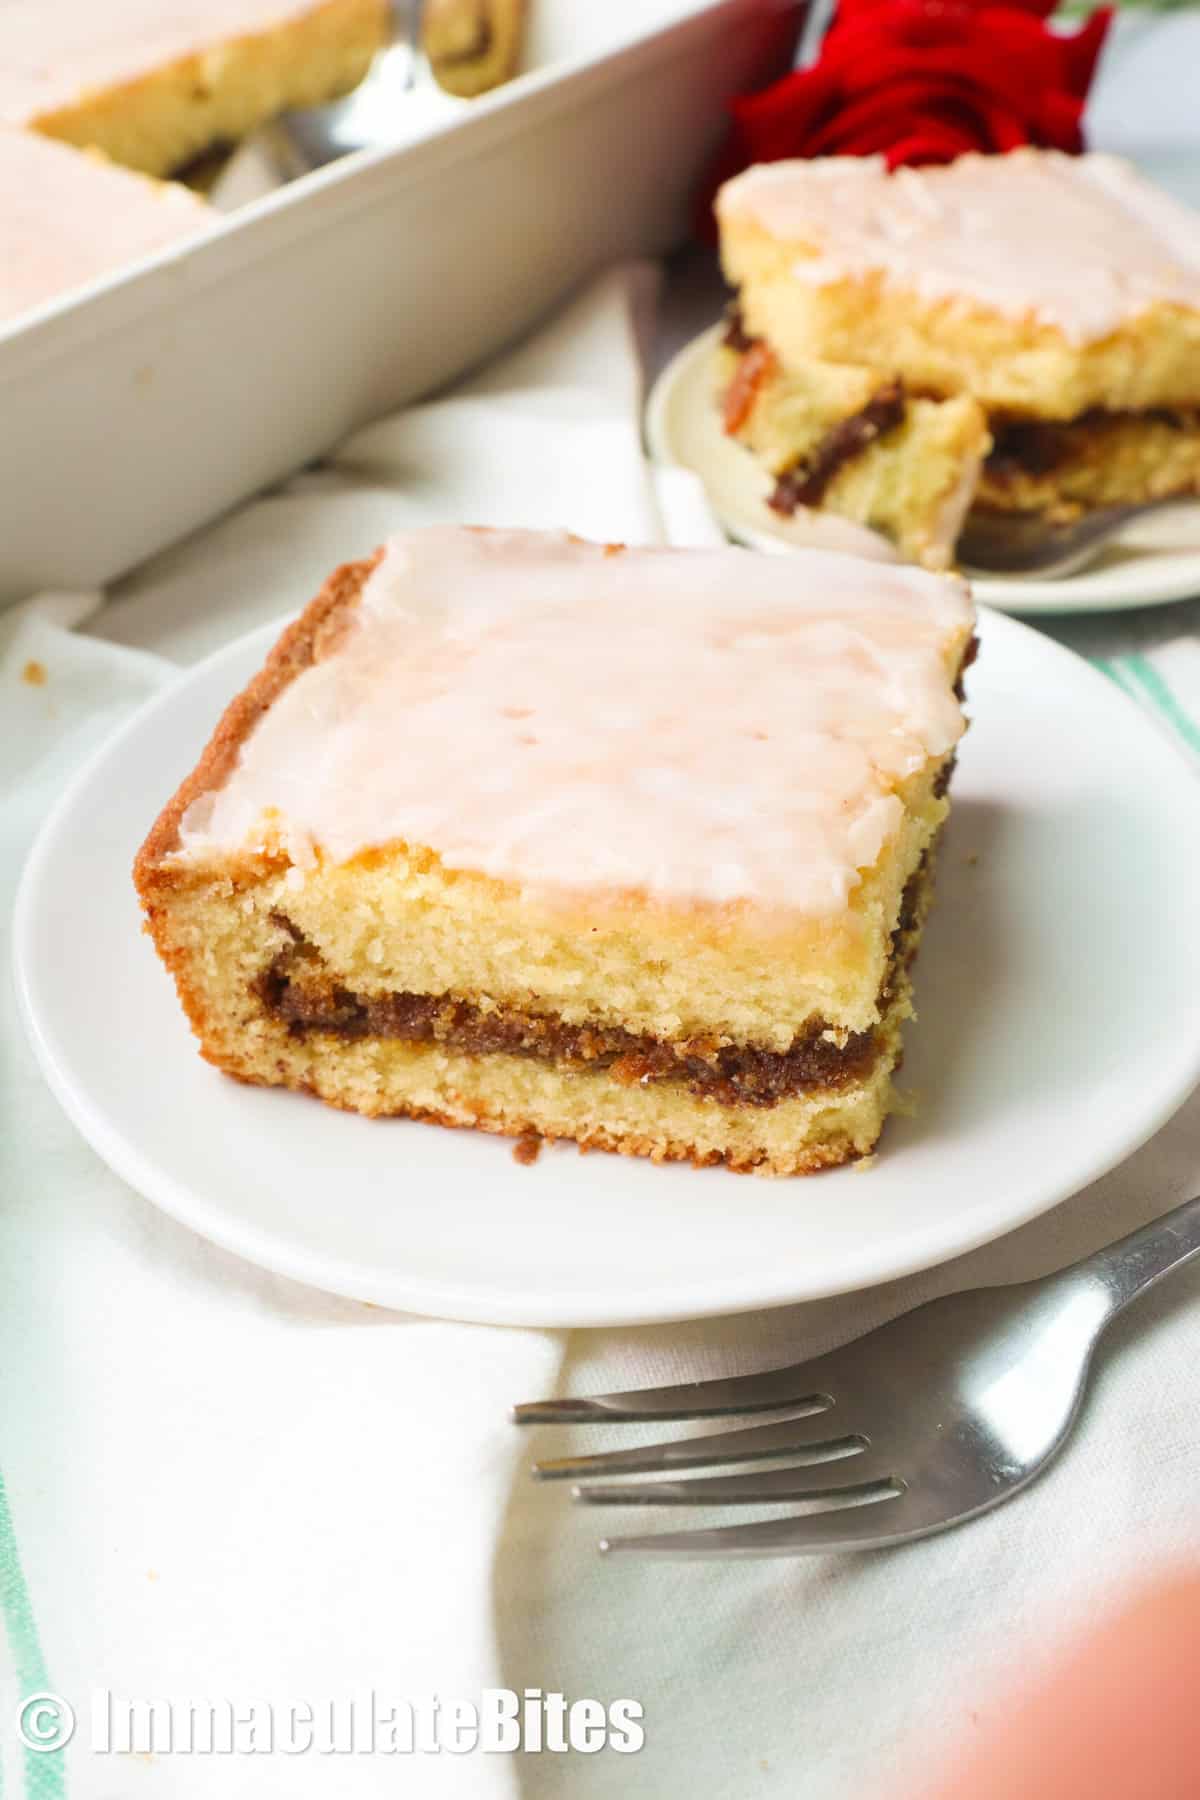 Enjoy this honey bun cake with cinnamon and spice swirls